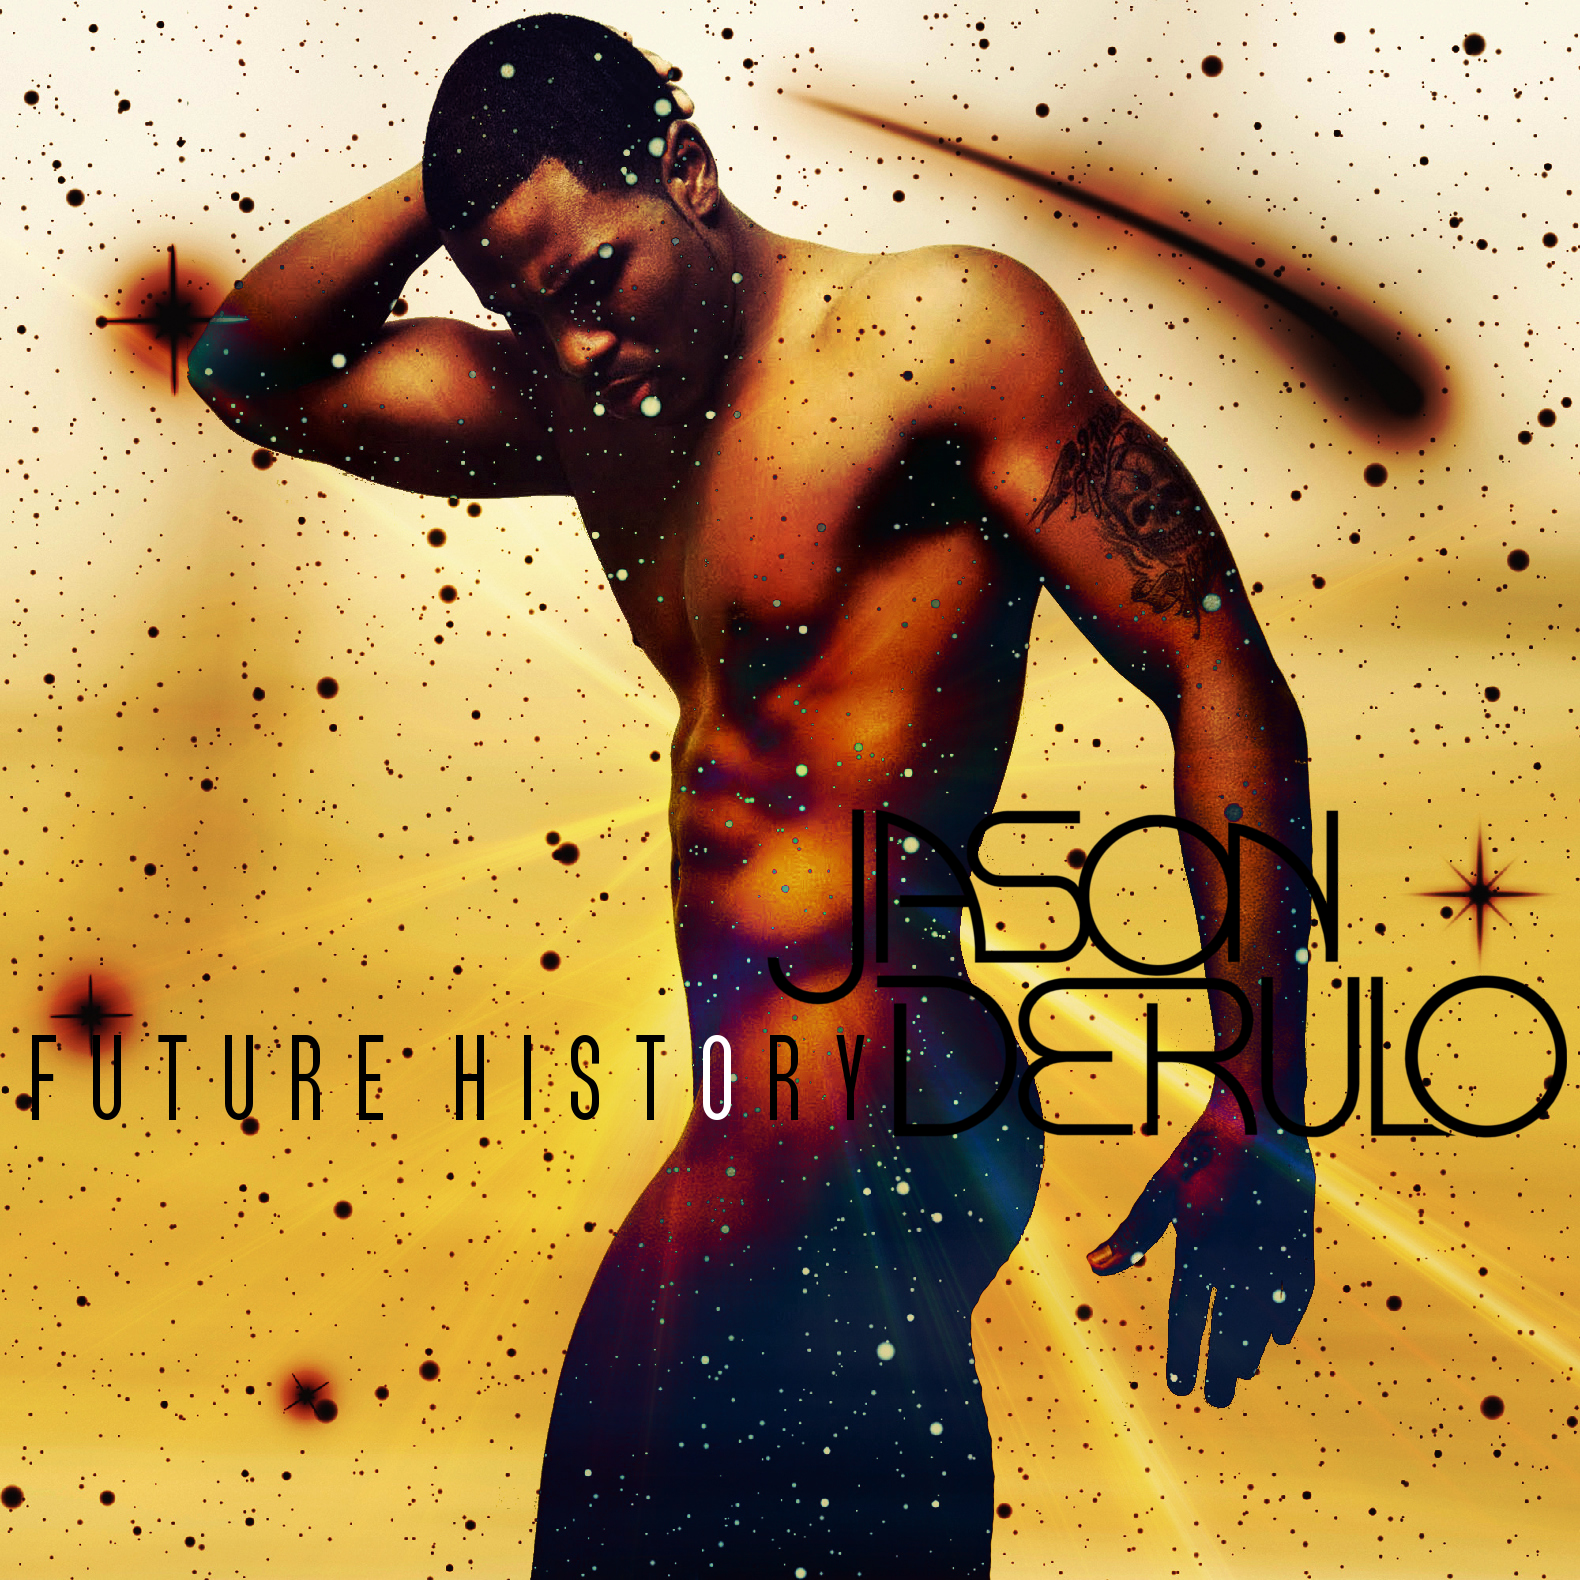 lilbadboy0: Jason Derulo - Future History (Album Covers)